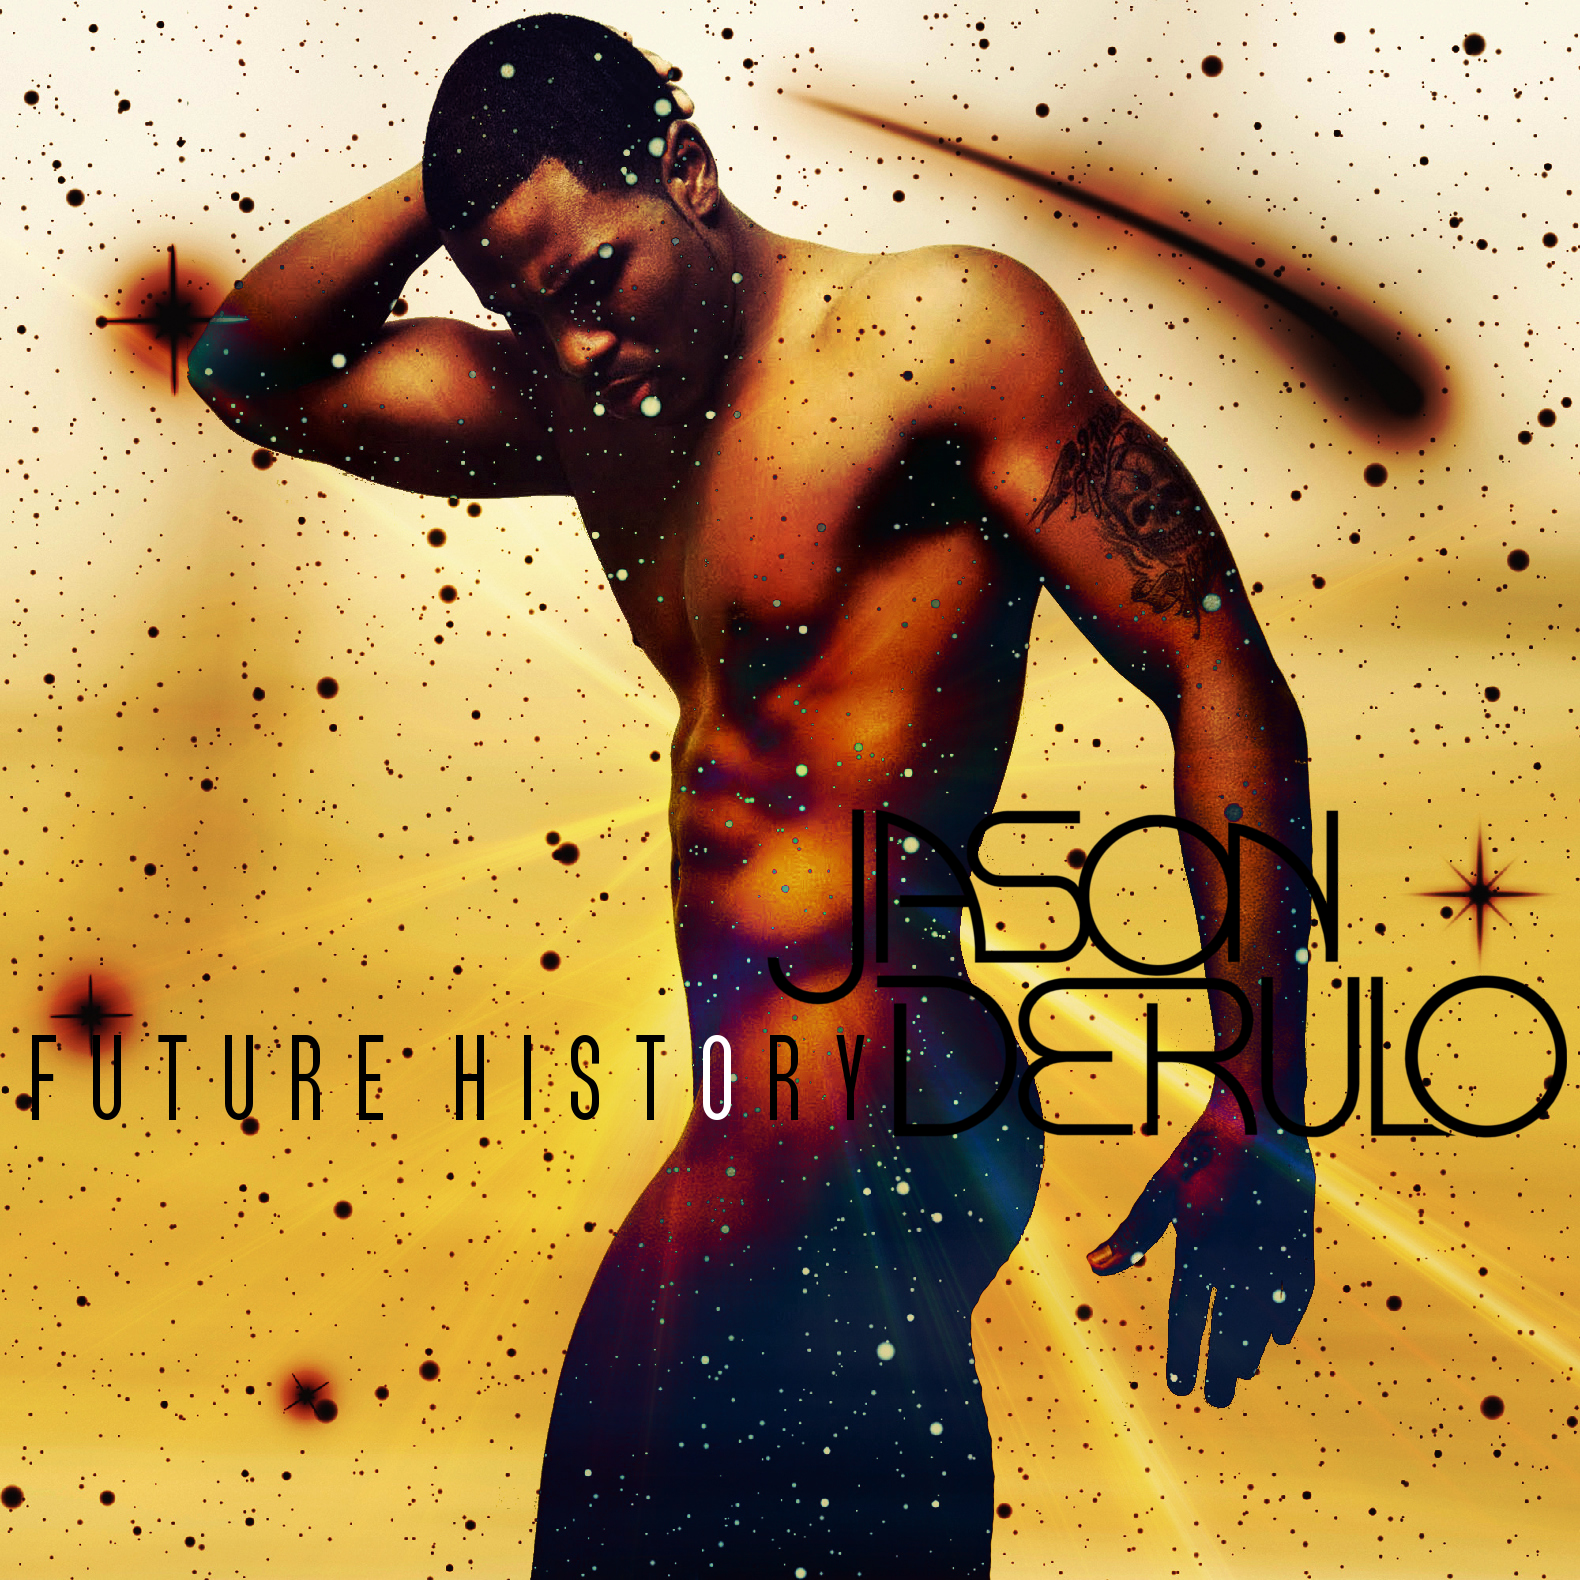 lilbadboy0: Jason Derulo - Future History (Album Covers)